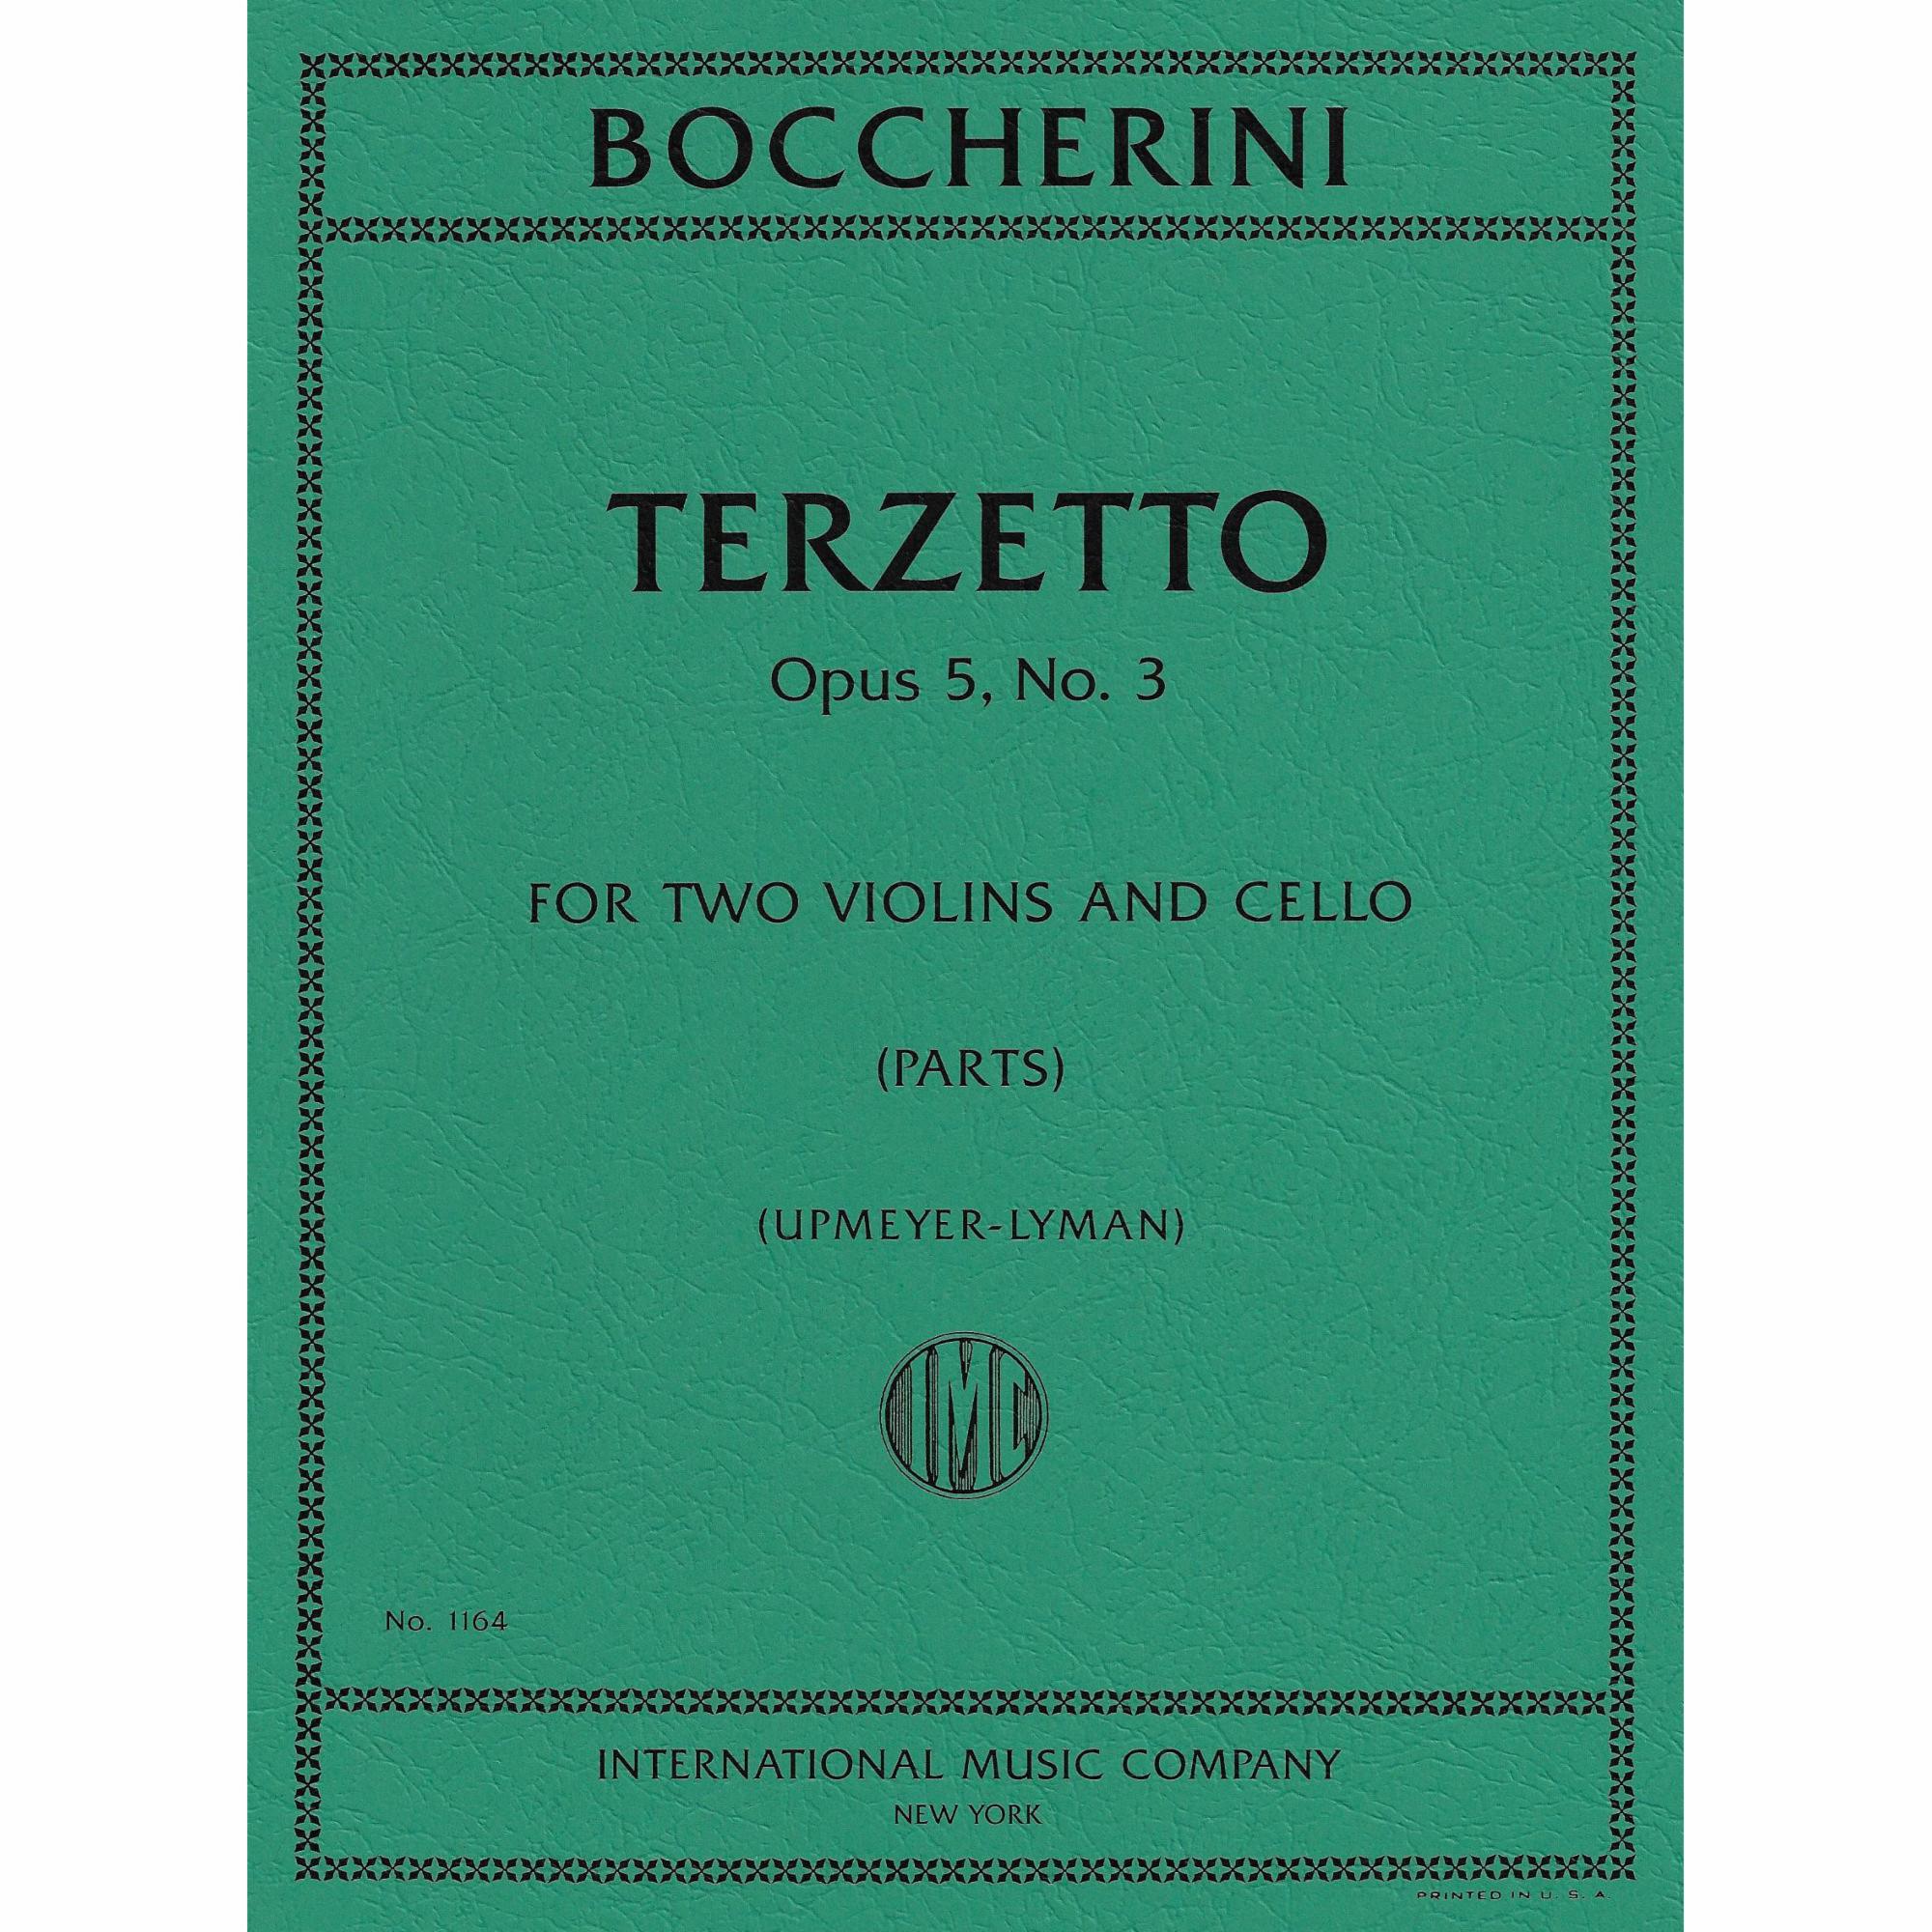 Boccherini -- Terzetto, Op. 54, No. 3 for Two Violins and Cello